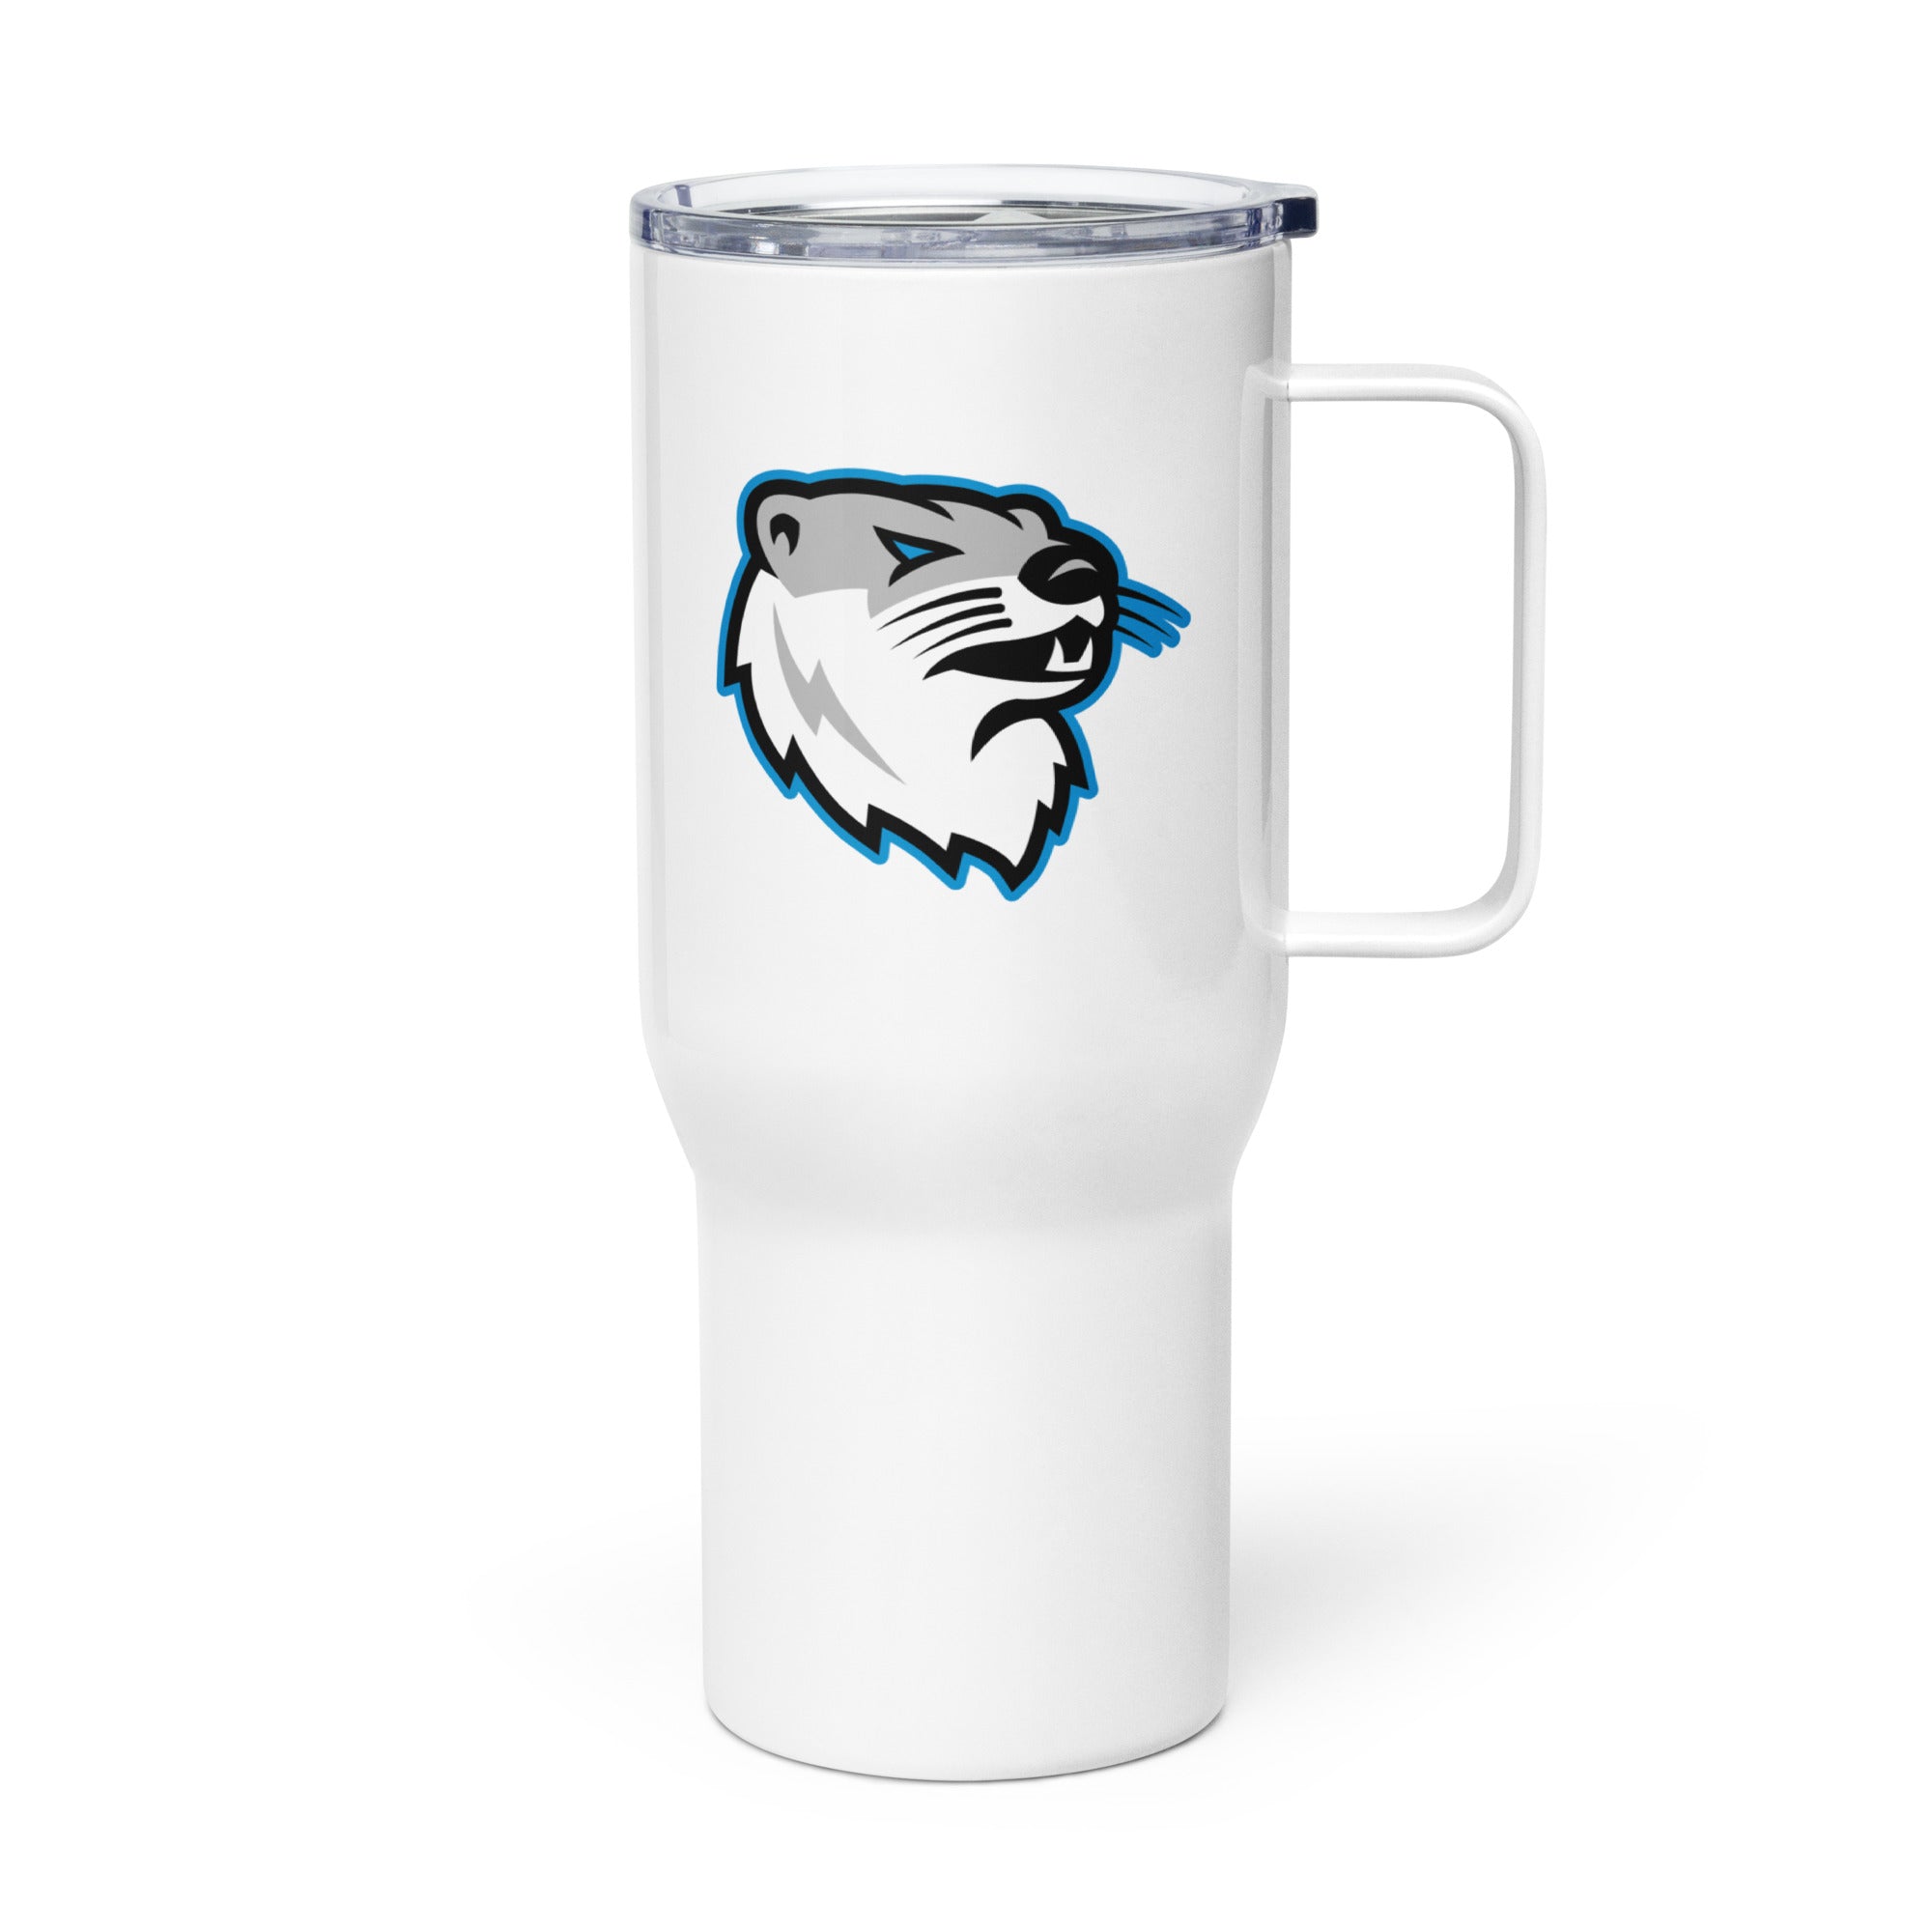 Otters Travel mug with a handle